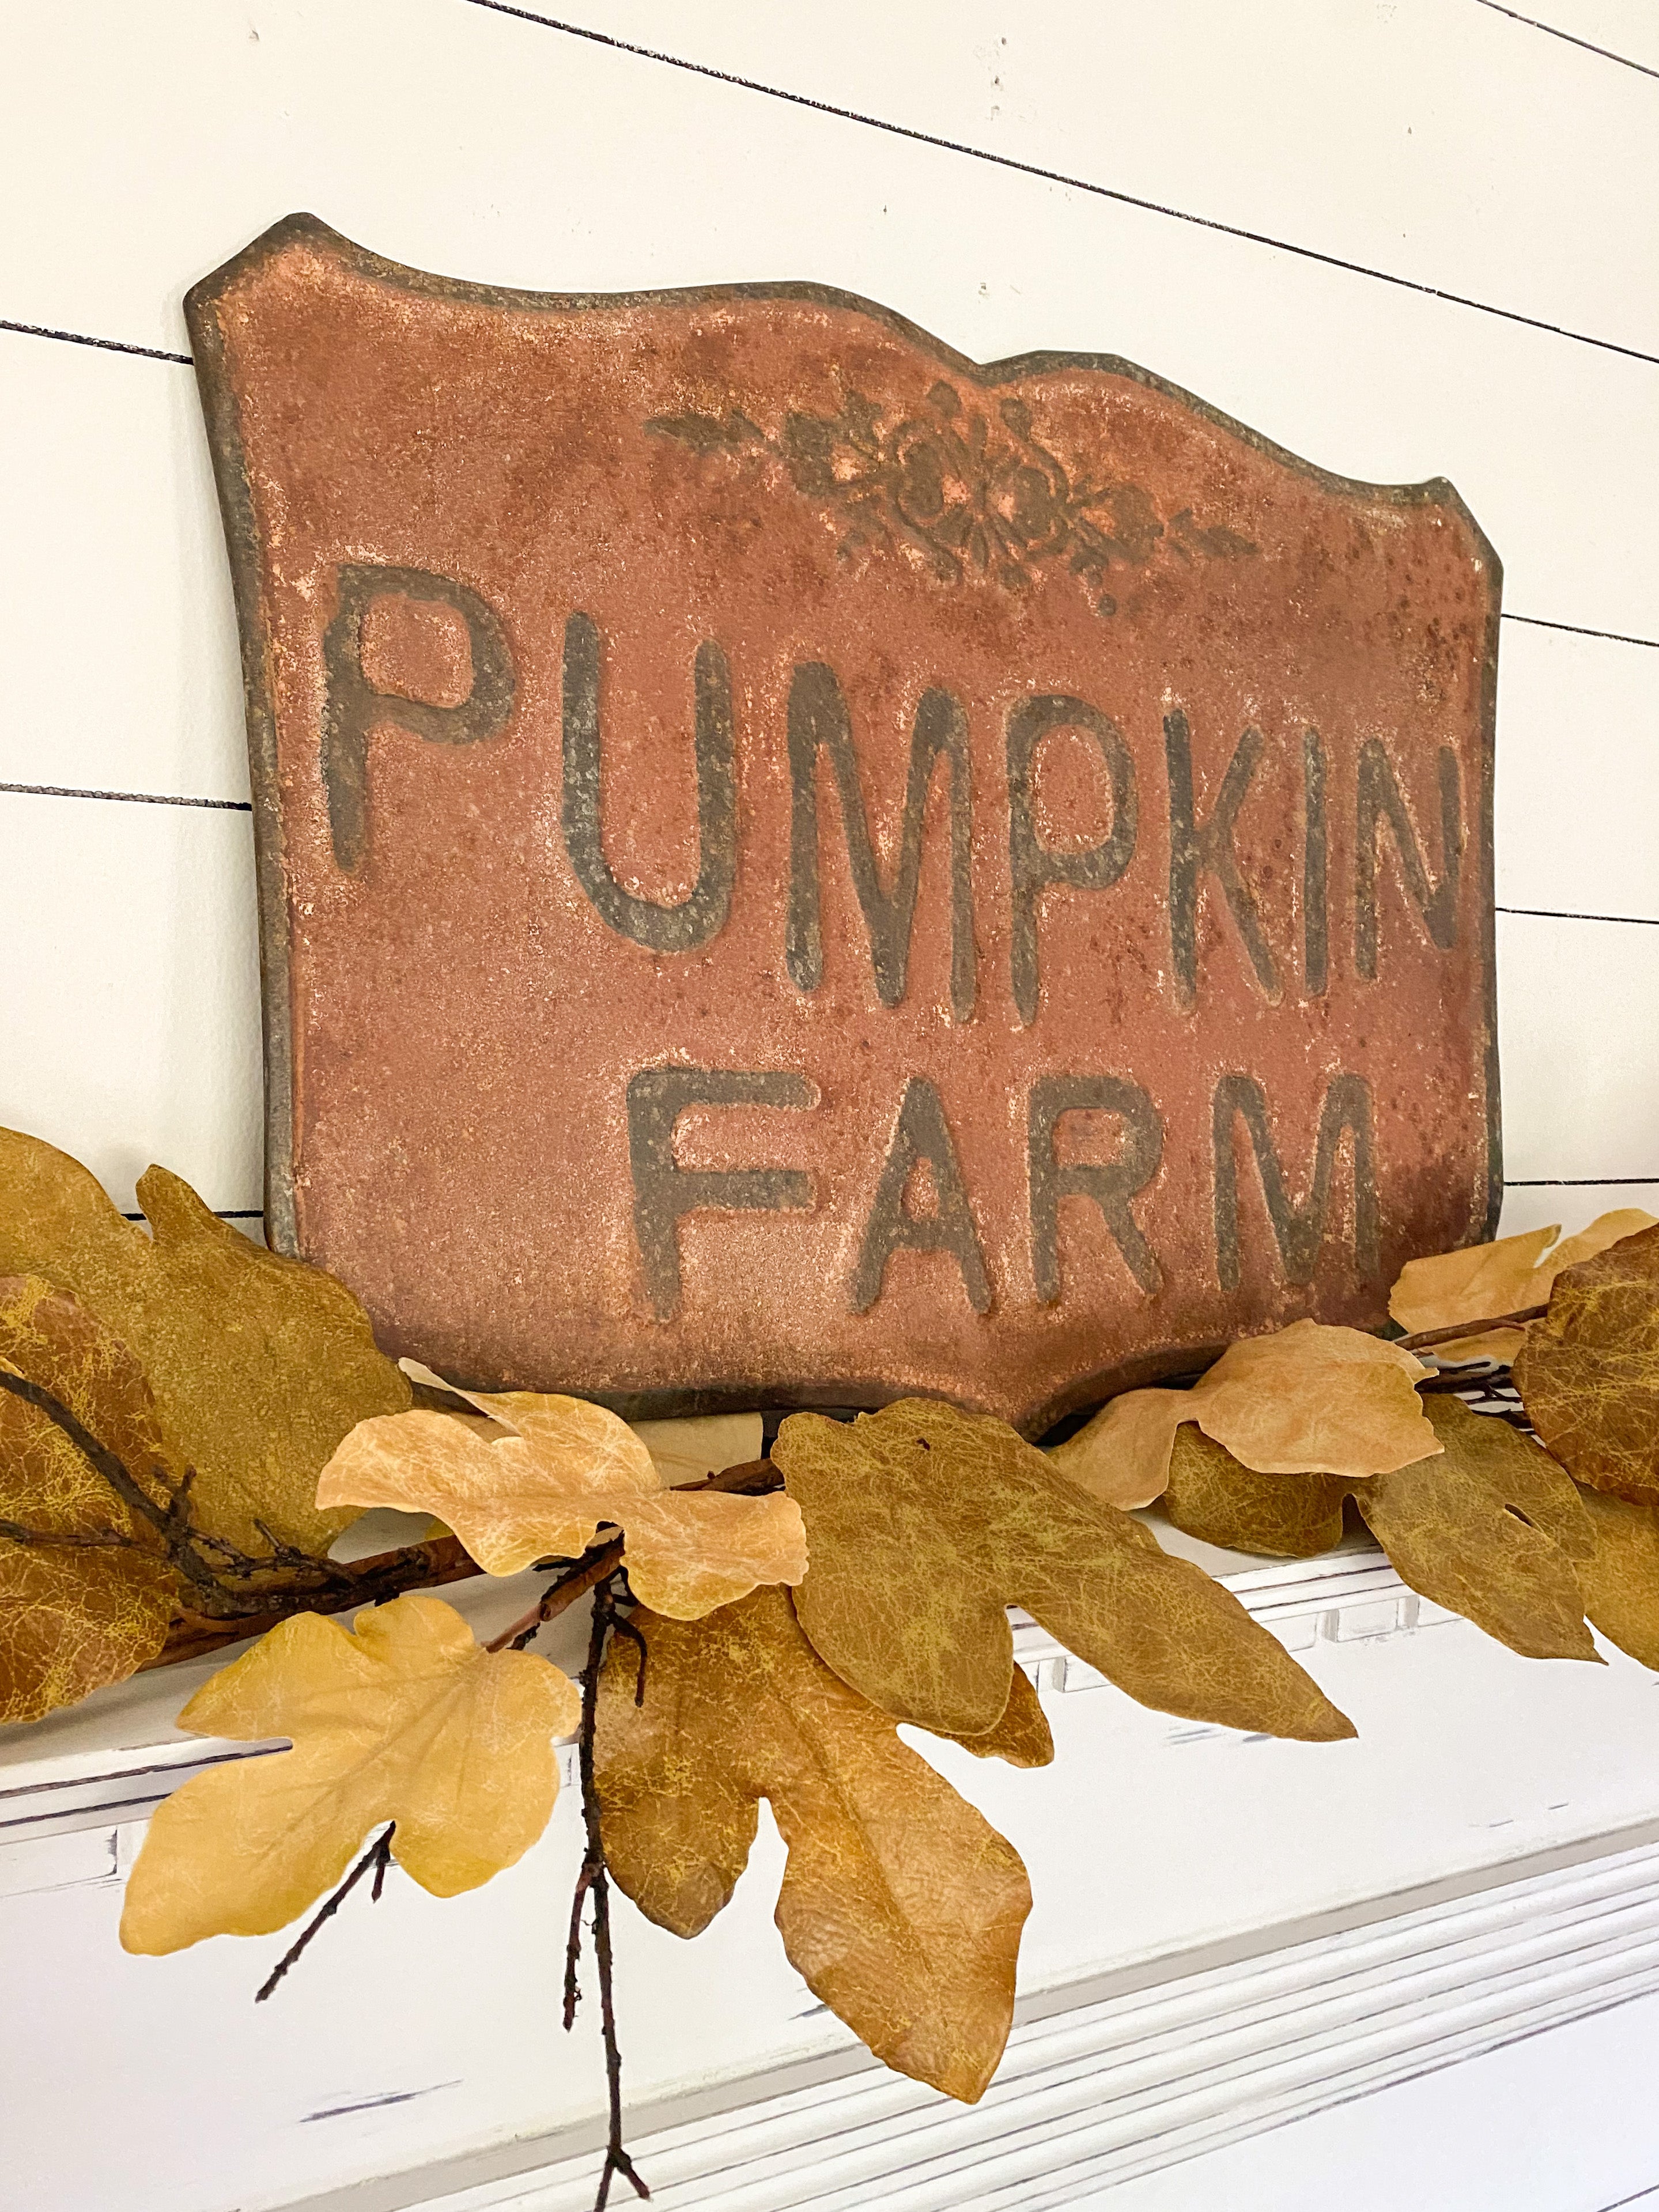 Metal Pumpkin Farm Sign